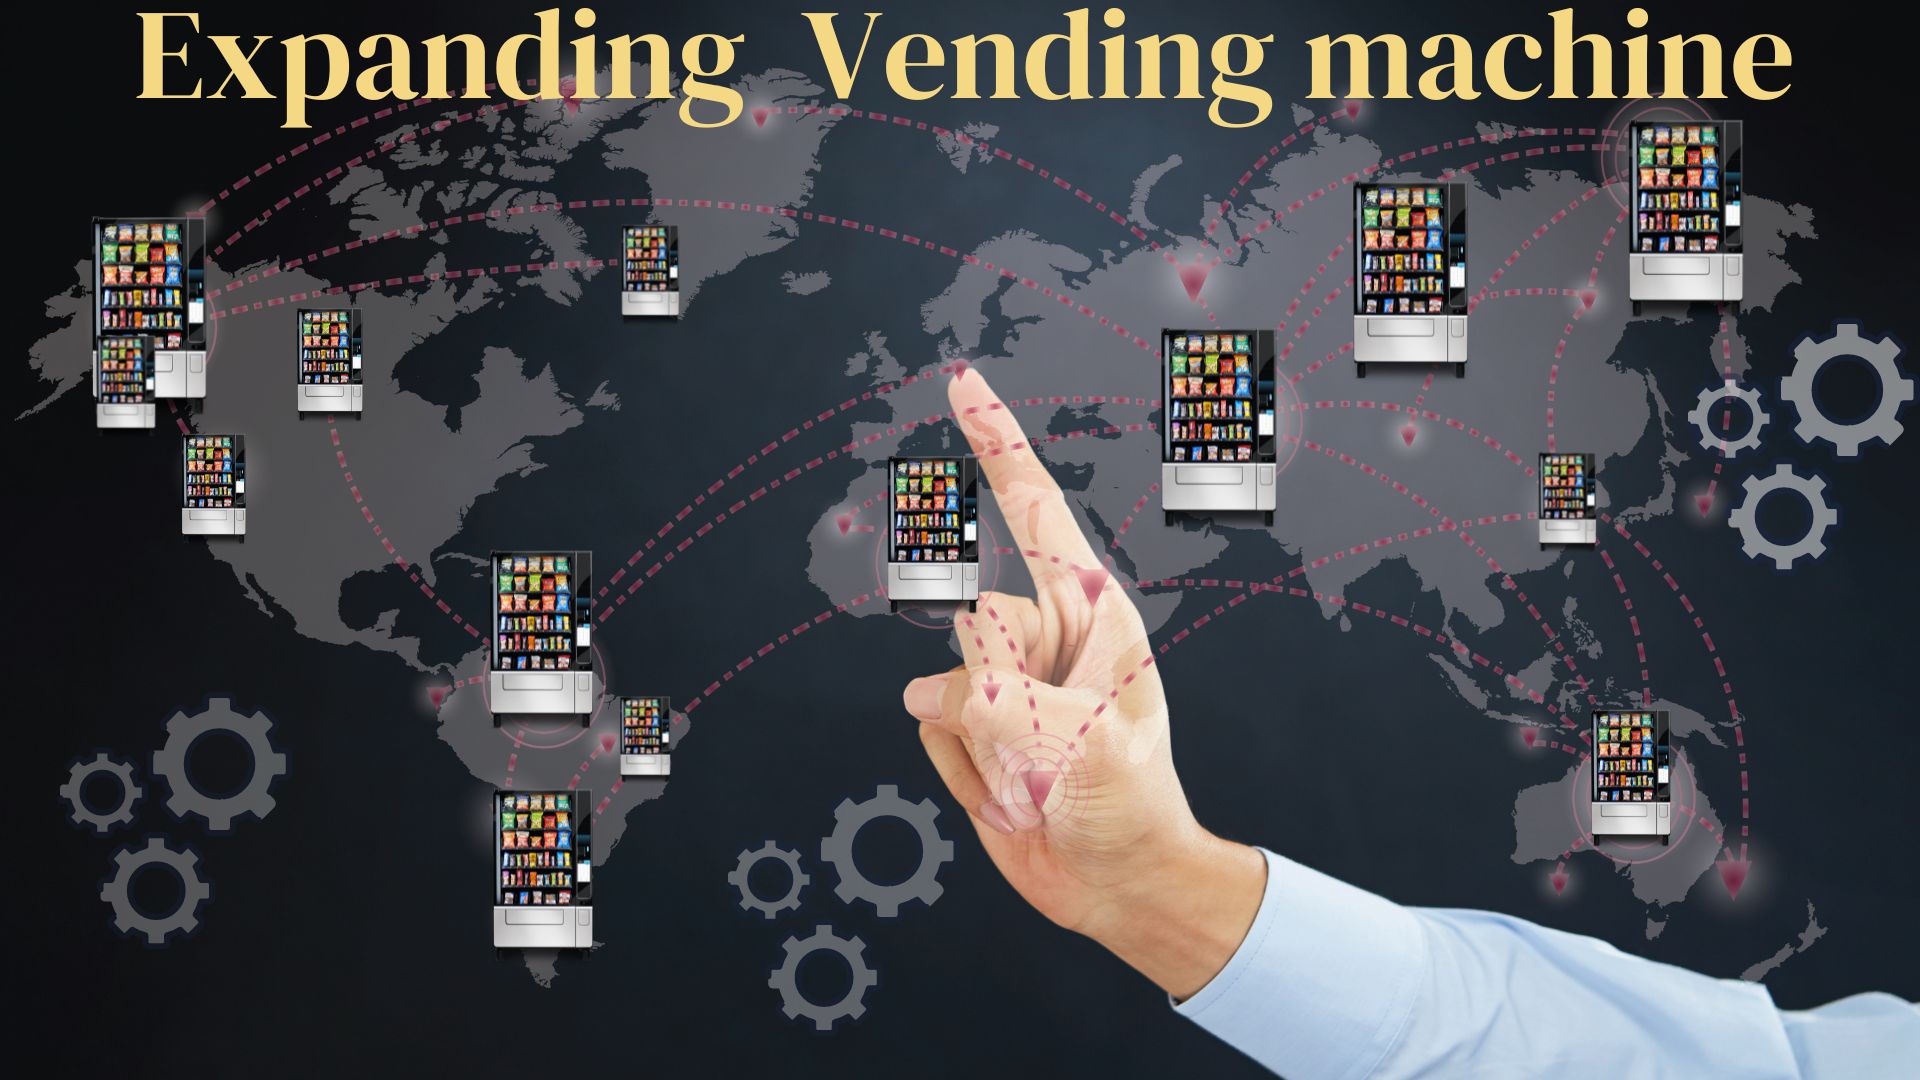 Vending machine business failing- Expanison